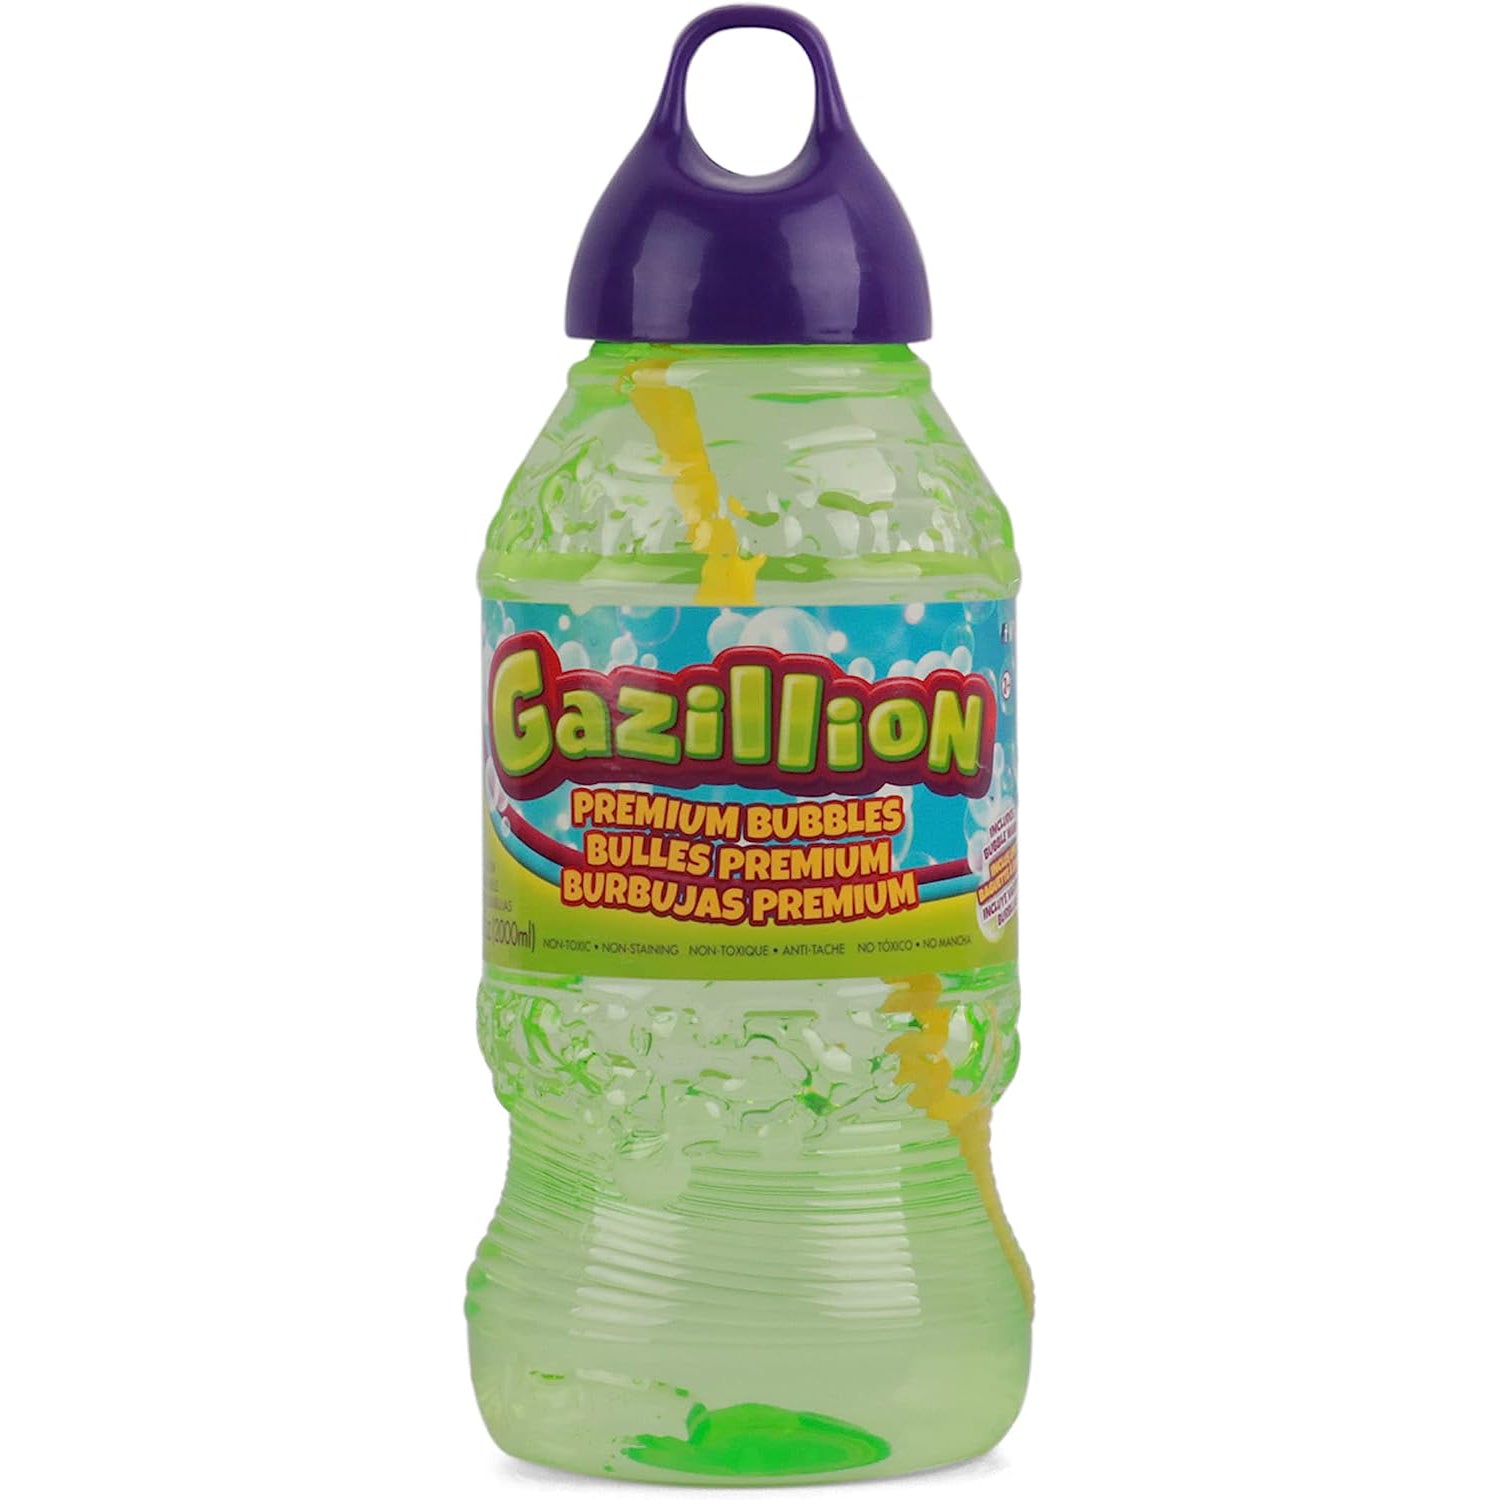 Gazillion 2-Liter Bubble Solution